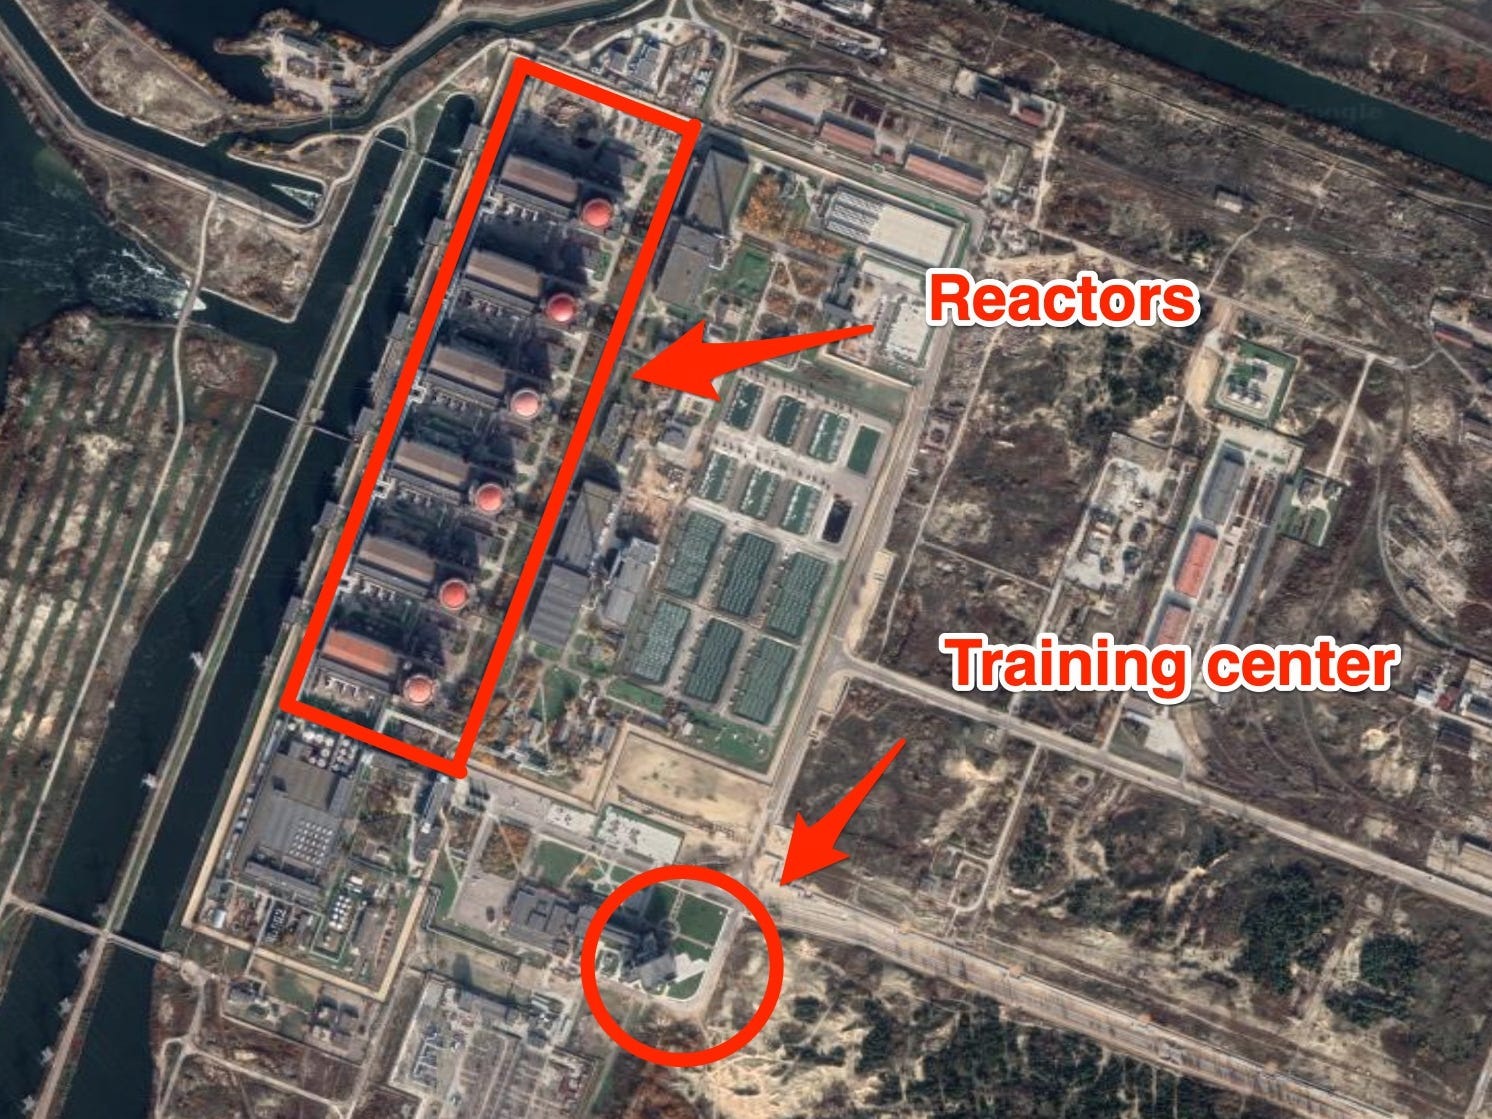 An annotated satelite image shows the plan of the Zaporizhzhia power plant